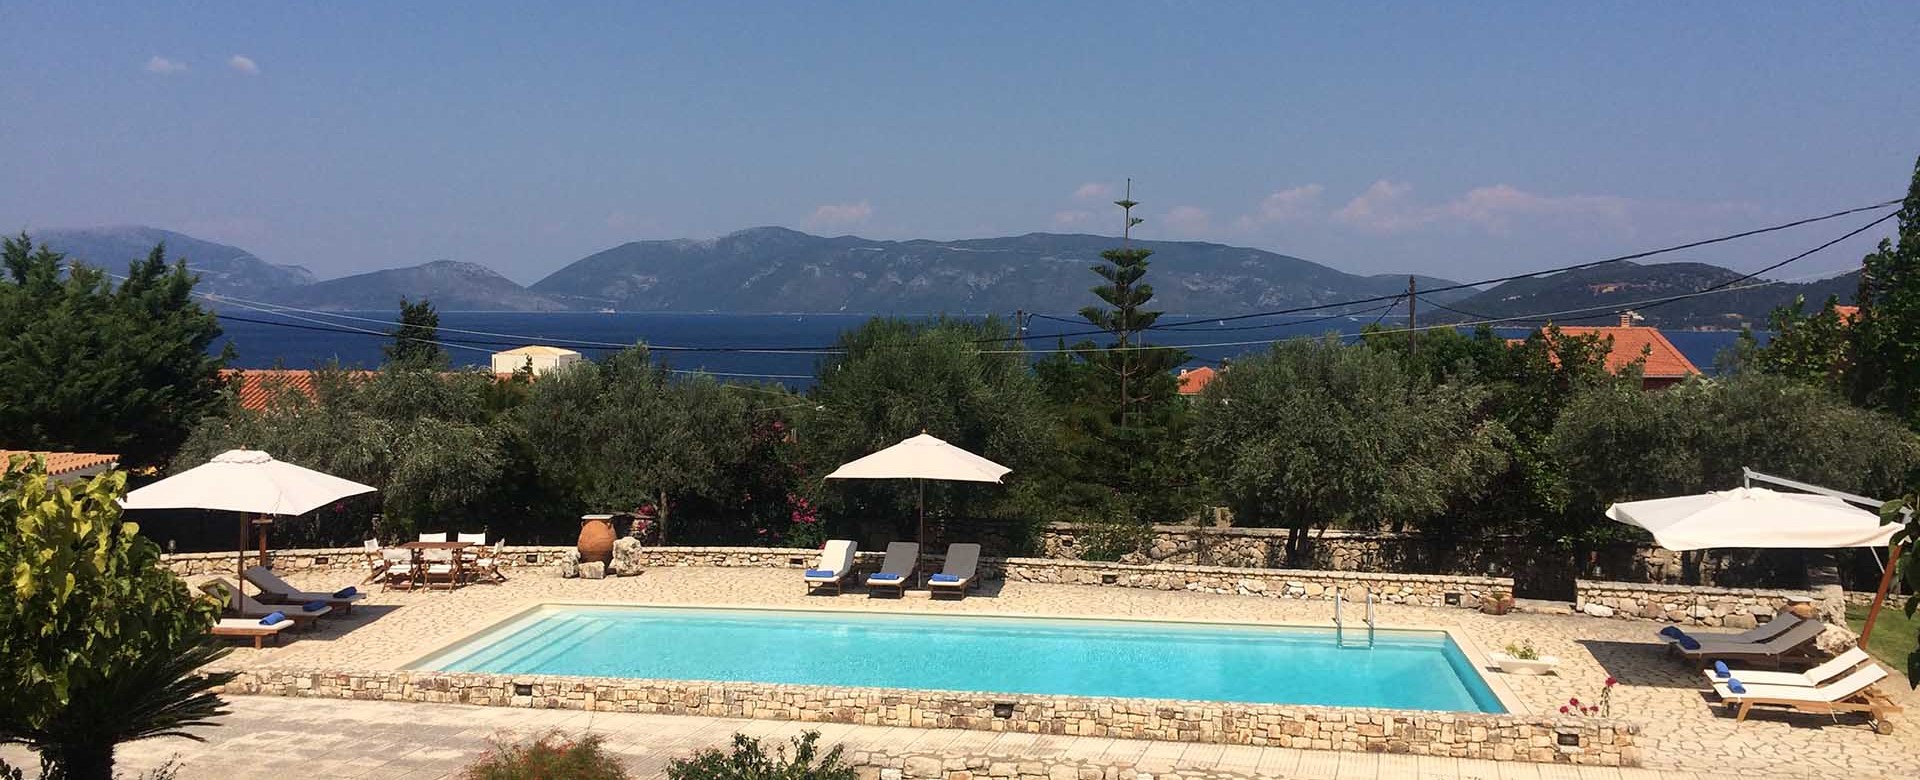 The pool, sea and mountain coastline make a great setting for a holiday in Melissani Apartments, Karavomilos, Kefalonia, Greek Islands